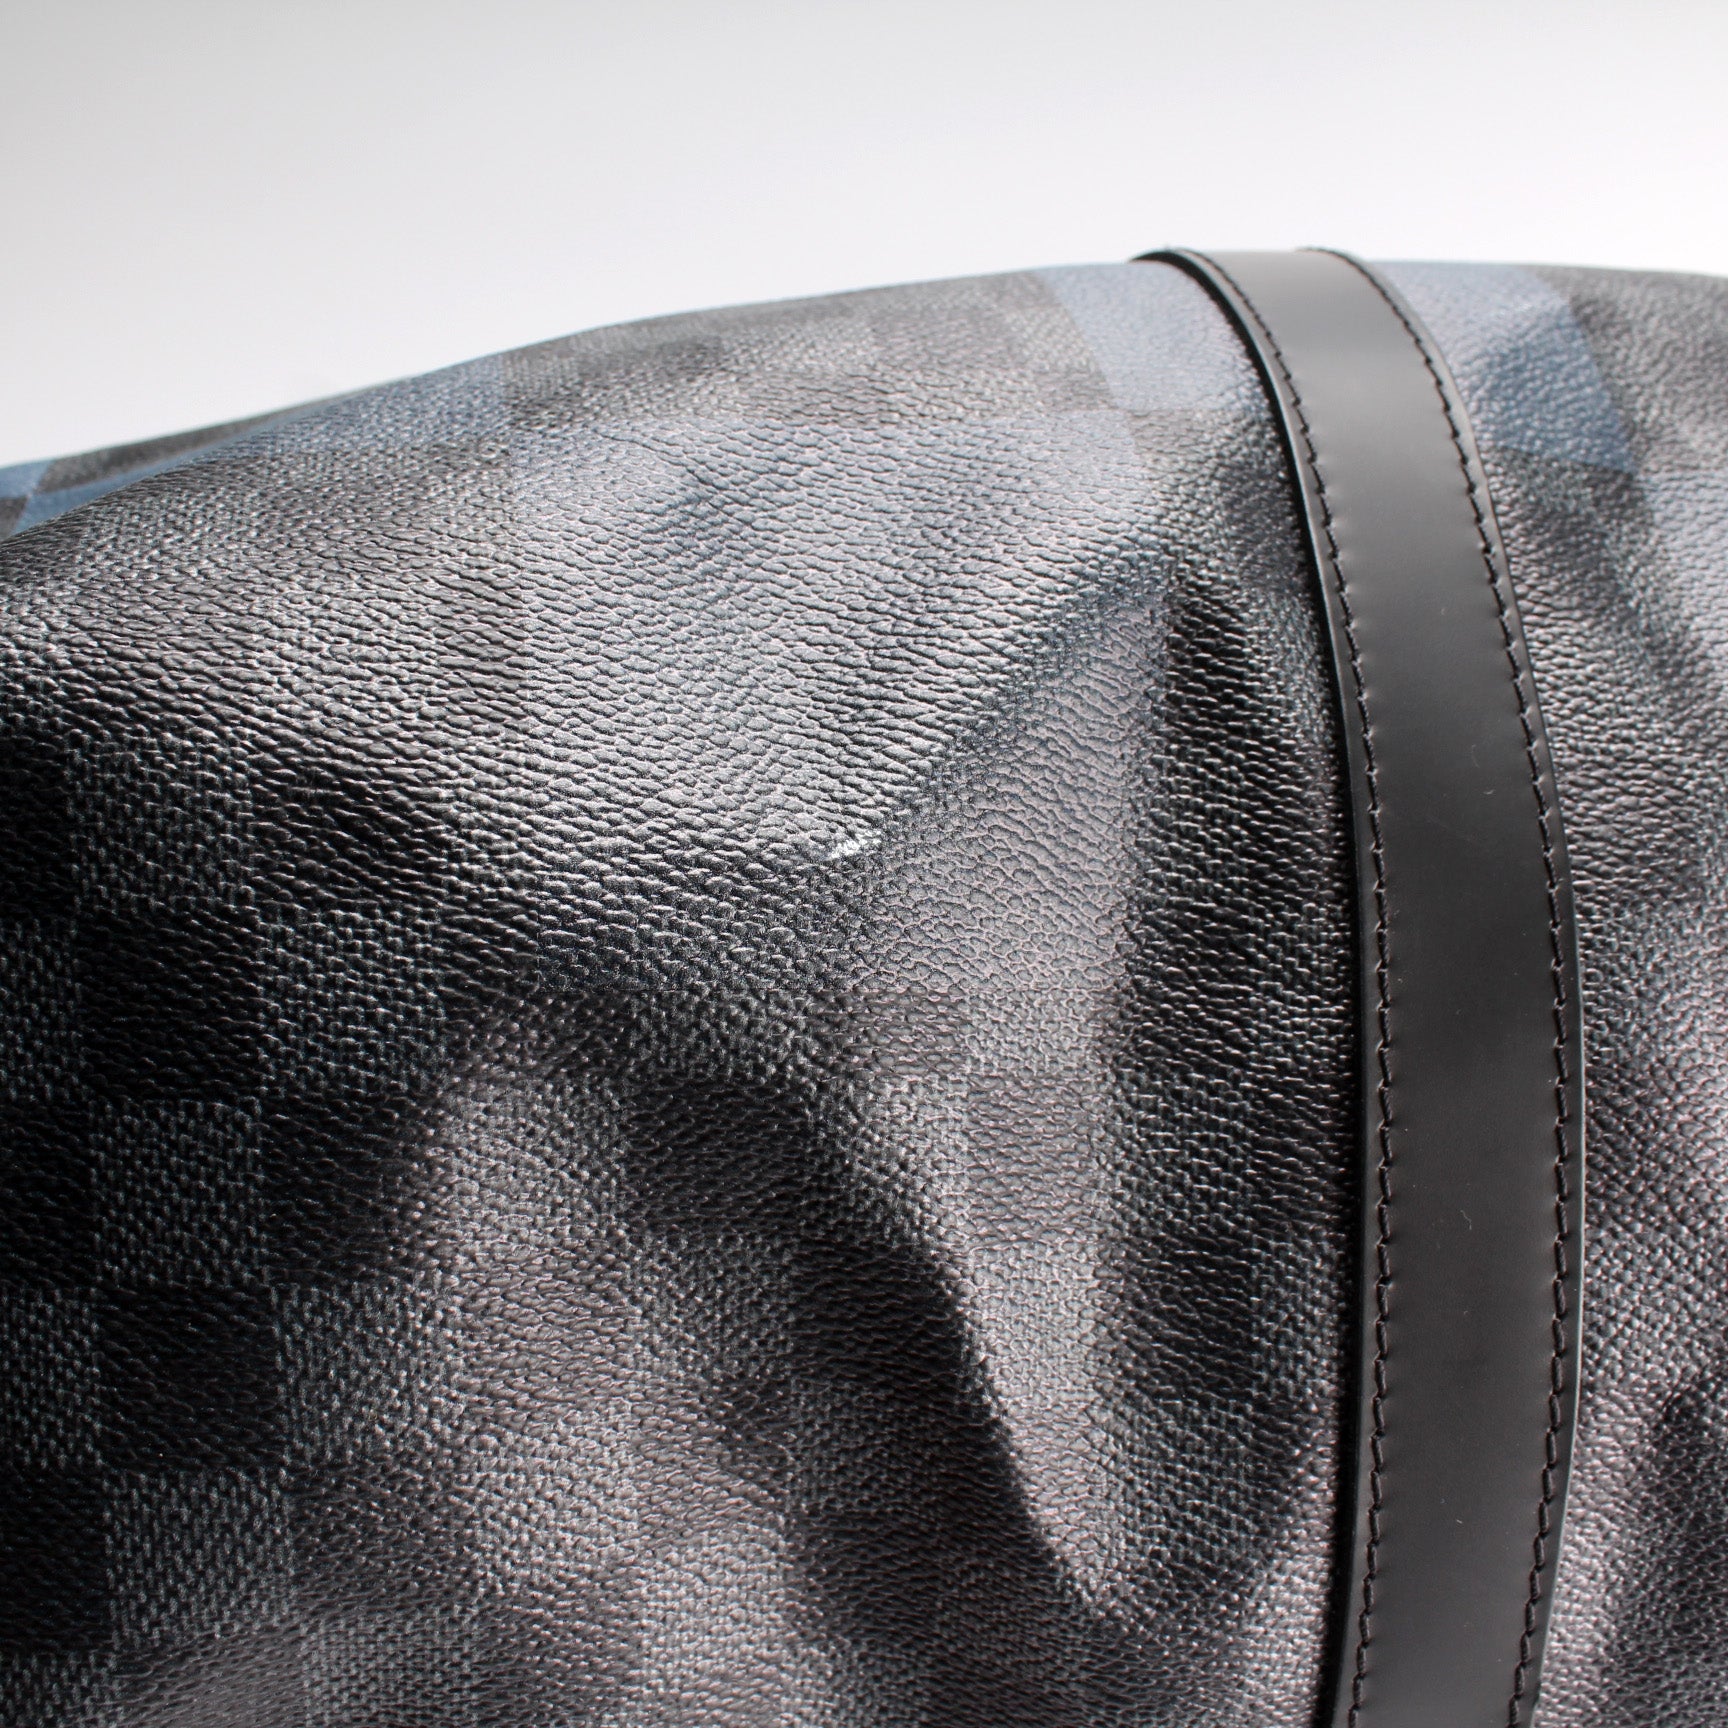 Louis Vuitton Keepall Bandouliere Bag Giant Damier Graphite Canvas